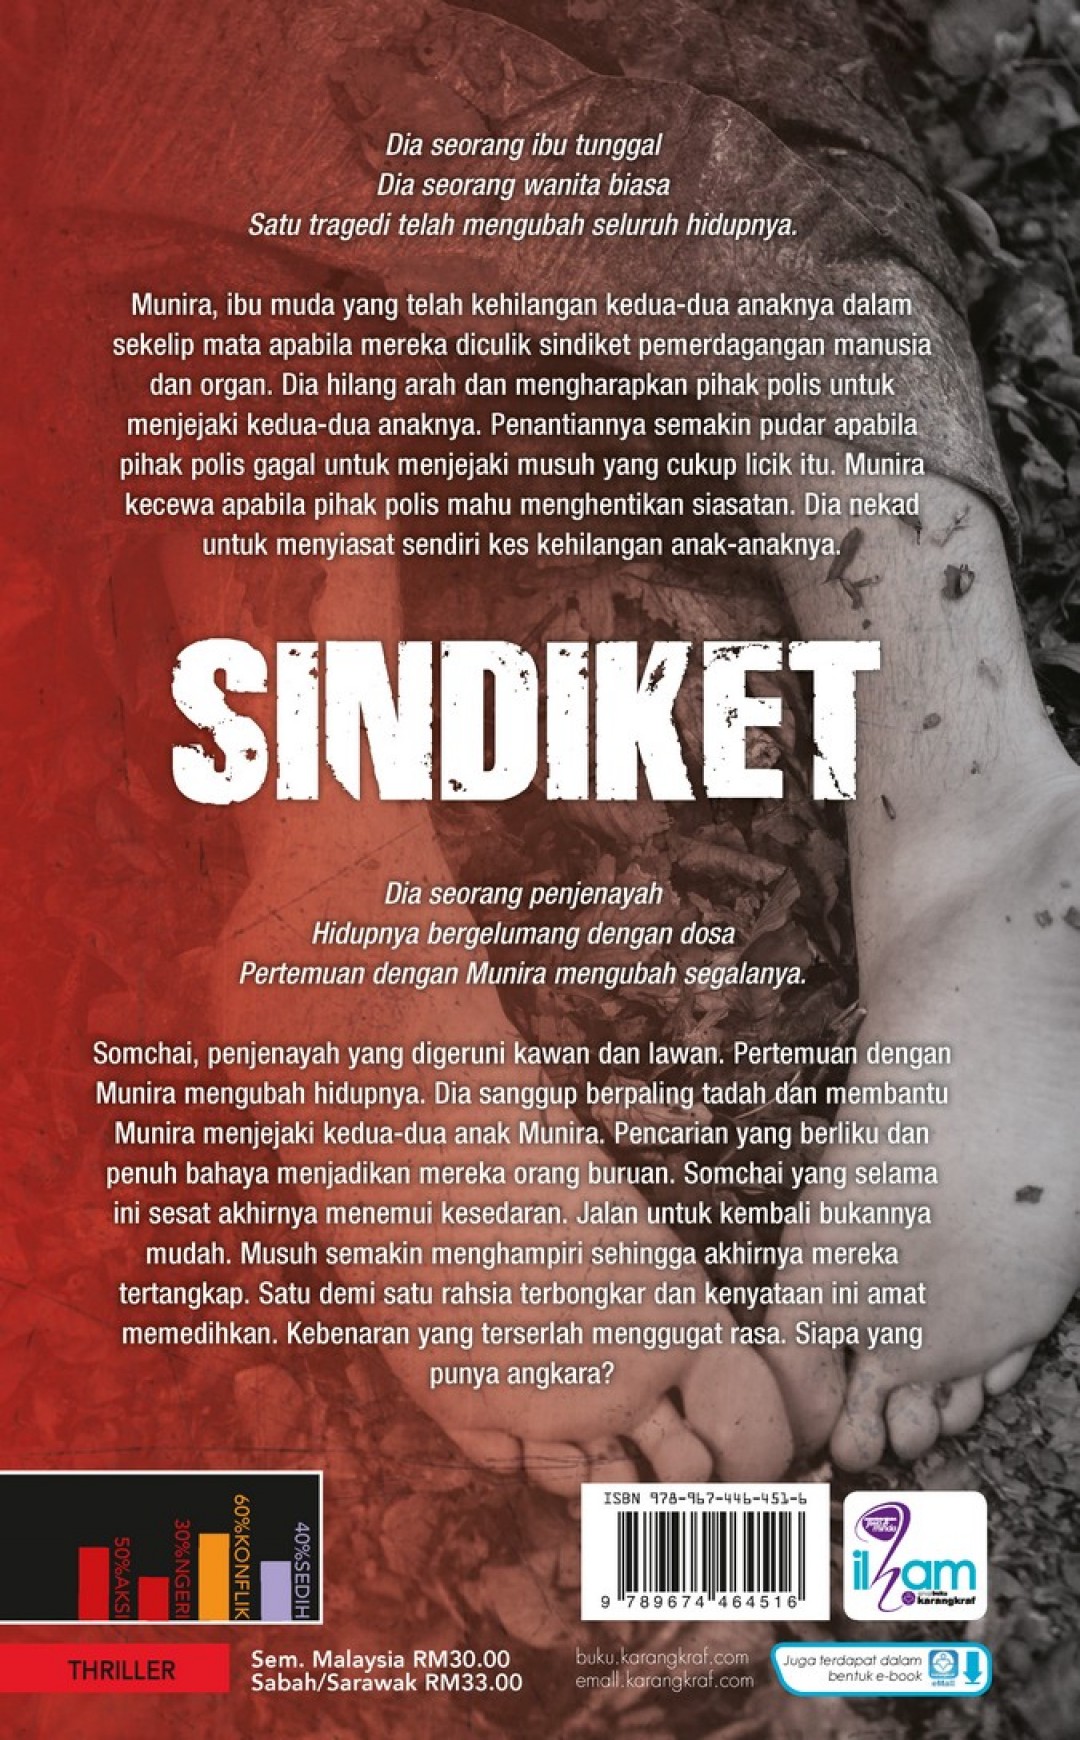 Sindiket - Arman Jazee